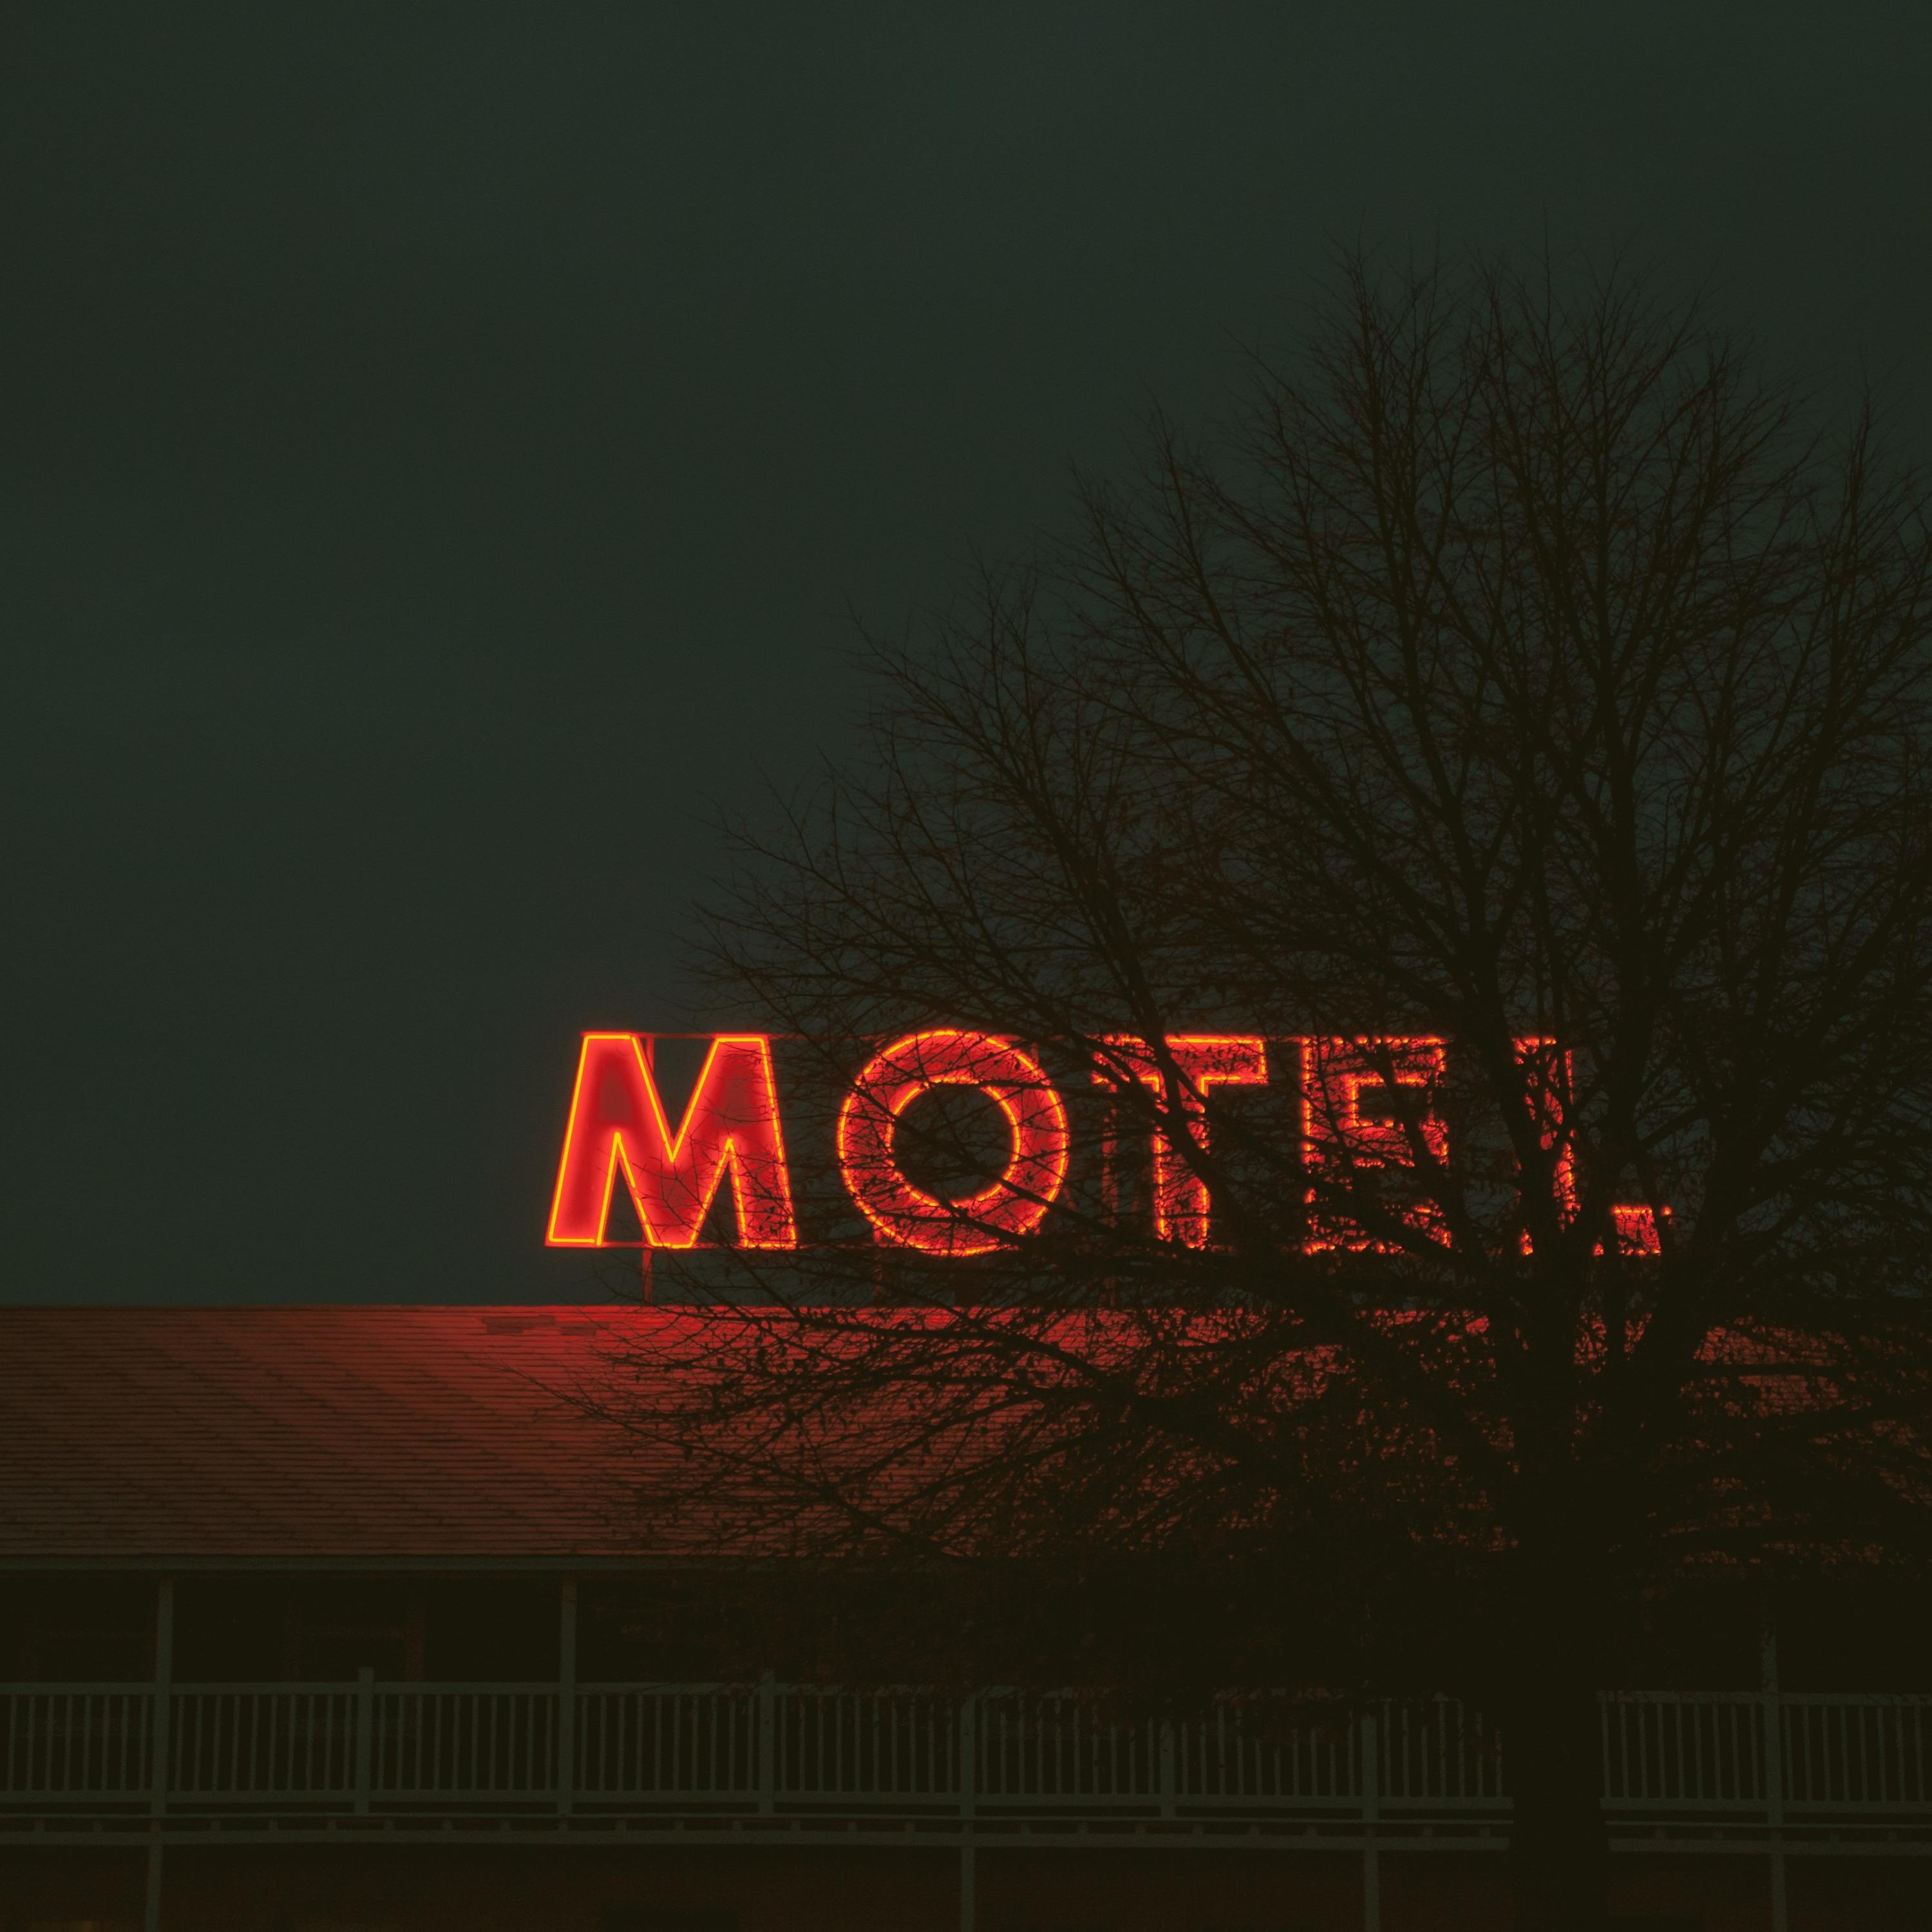 Nic D - Motel 6